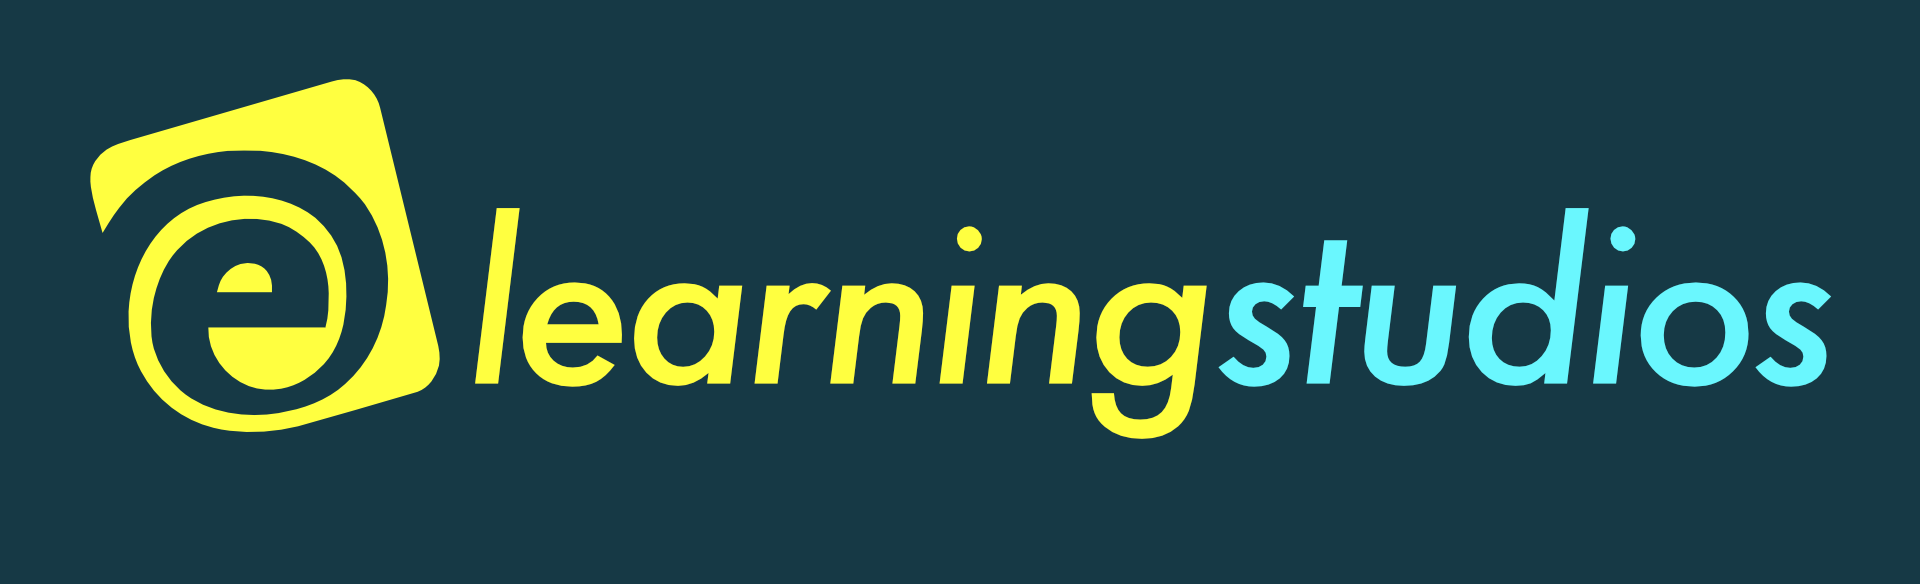 eLearning Studios logo